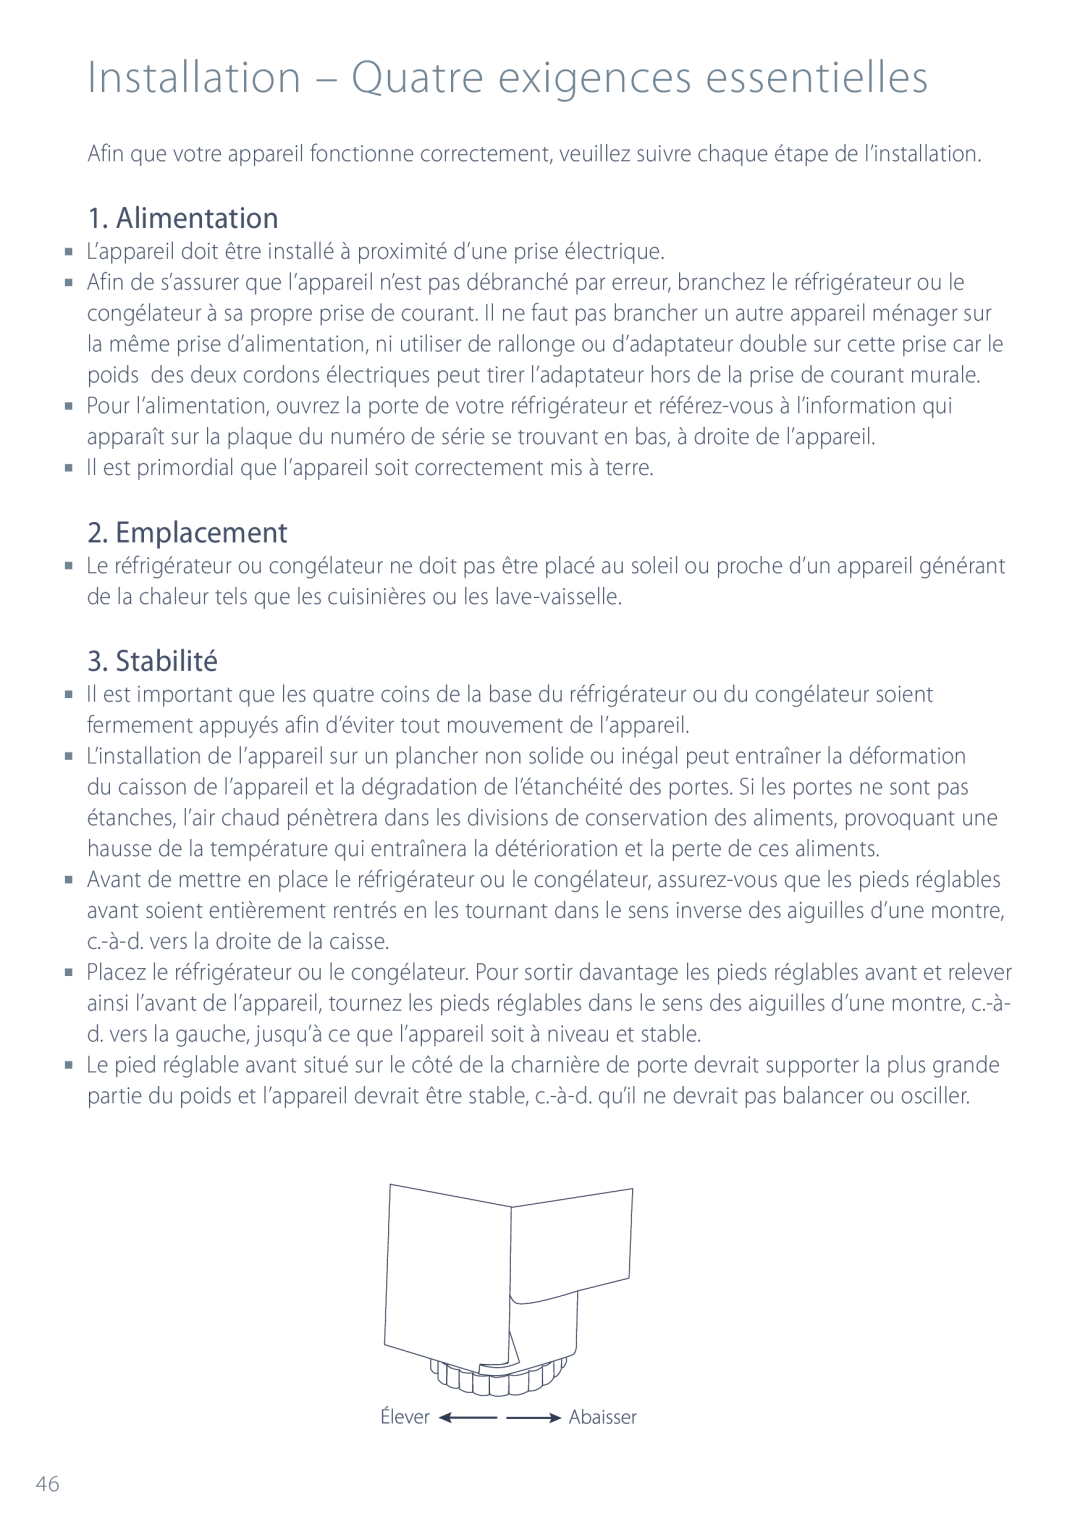 Fisher & Paykel ActiveSmart manual Installation - Quatre exigences essentielles, Alimentation, Emplacement, Stabilité 